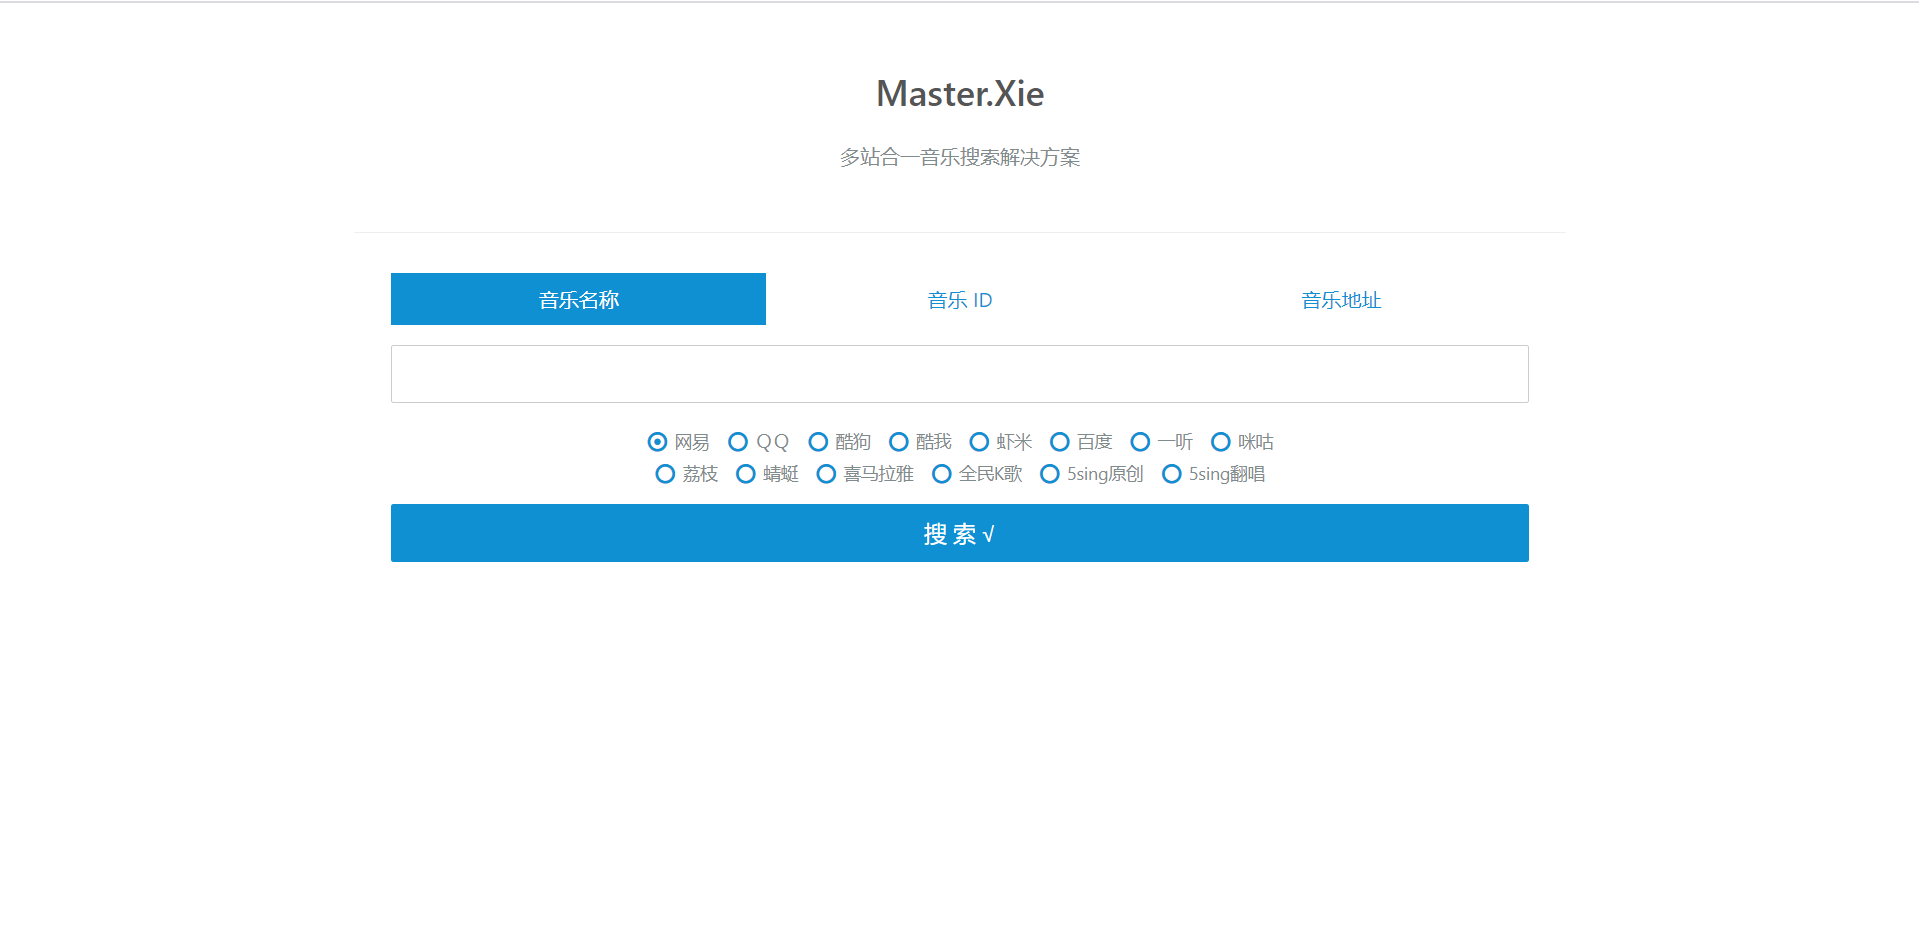 Master.Xie